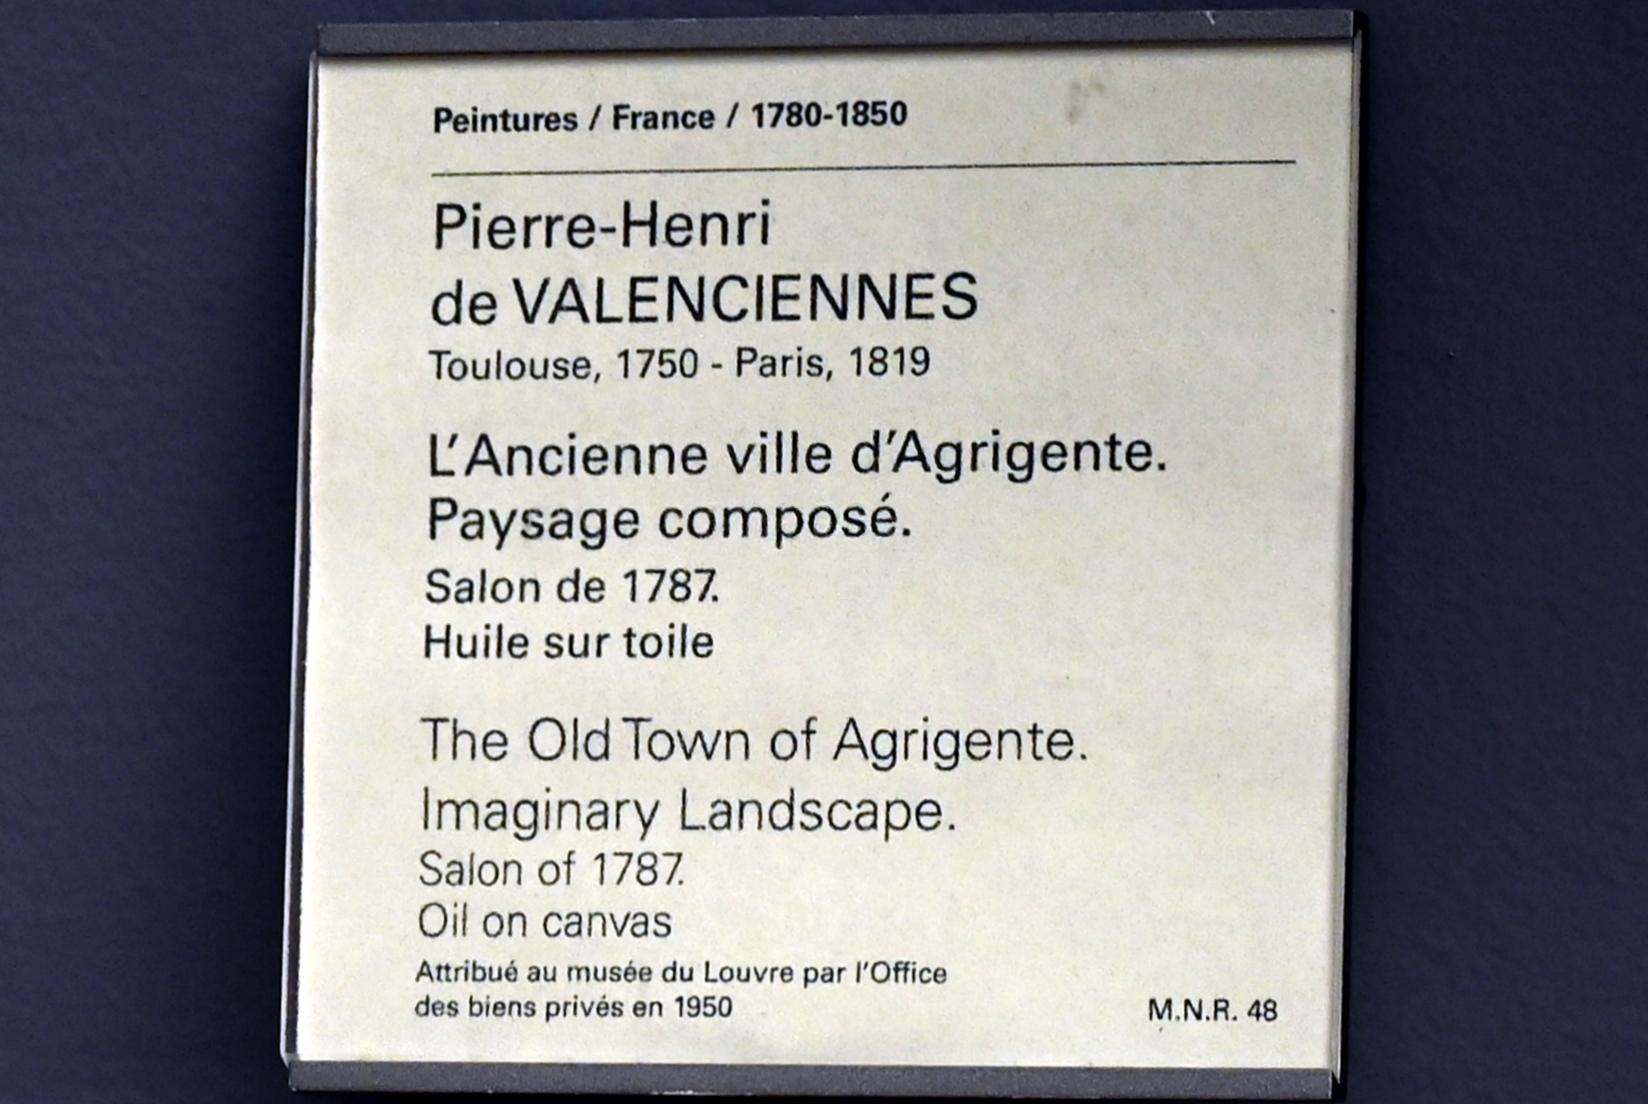 Pierre-Henri de Valenciennes (1780–1786), Die antike Stadt Agrigent in einer imaginären Landschaft, Paris, Musée du Louvre, Saal 935, vor 1787, Bild 2/2